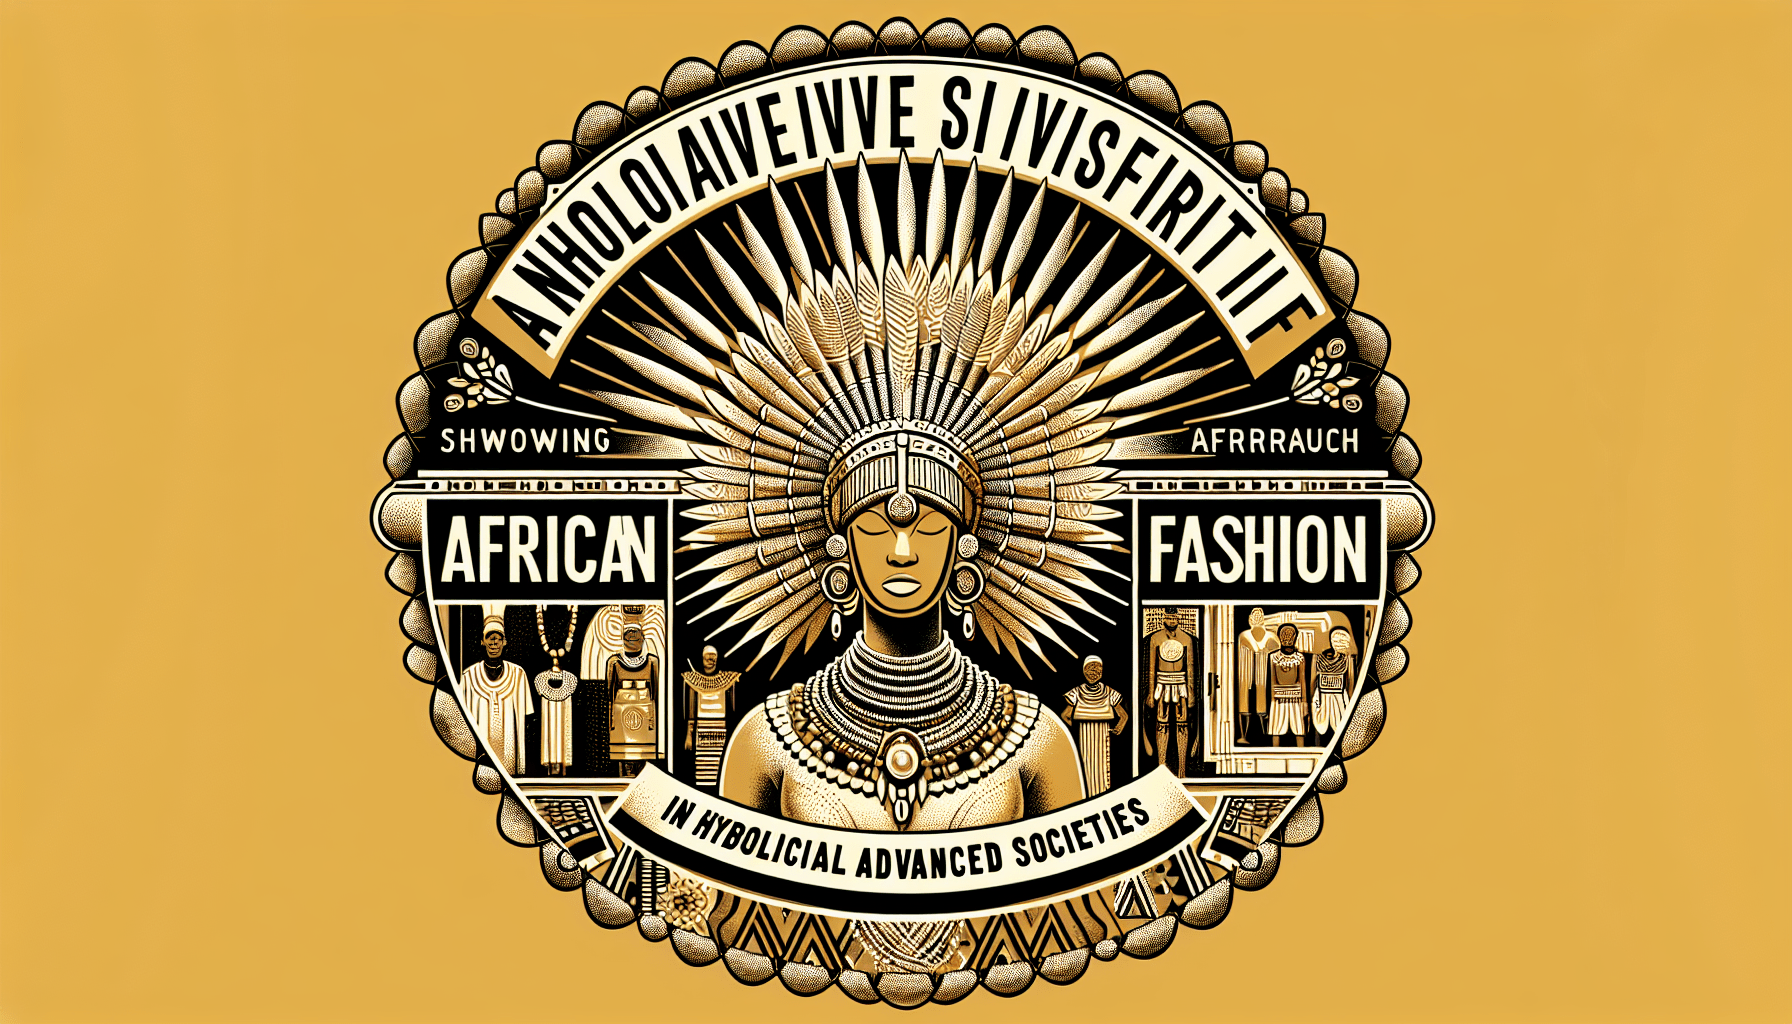 wakanda-forever-showcases-bolder-approach-to-fashion-says-costume-designer-ruth-e-carter-1 Wakanda Forever showcases bolder approach to fashion, says costume designer Ruth E Carter